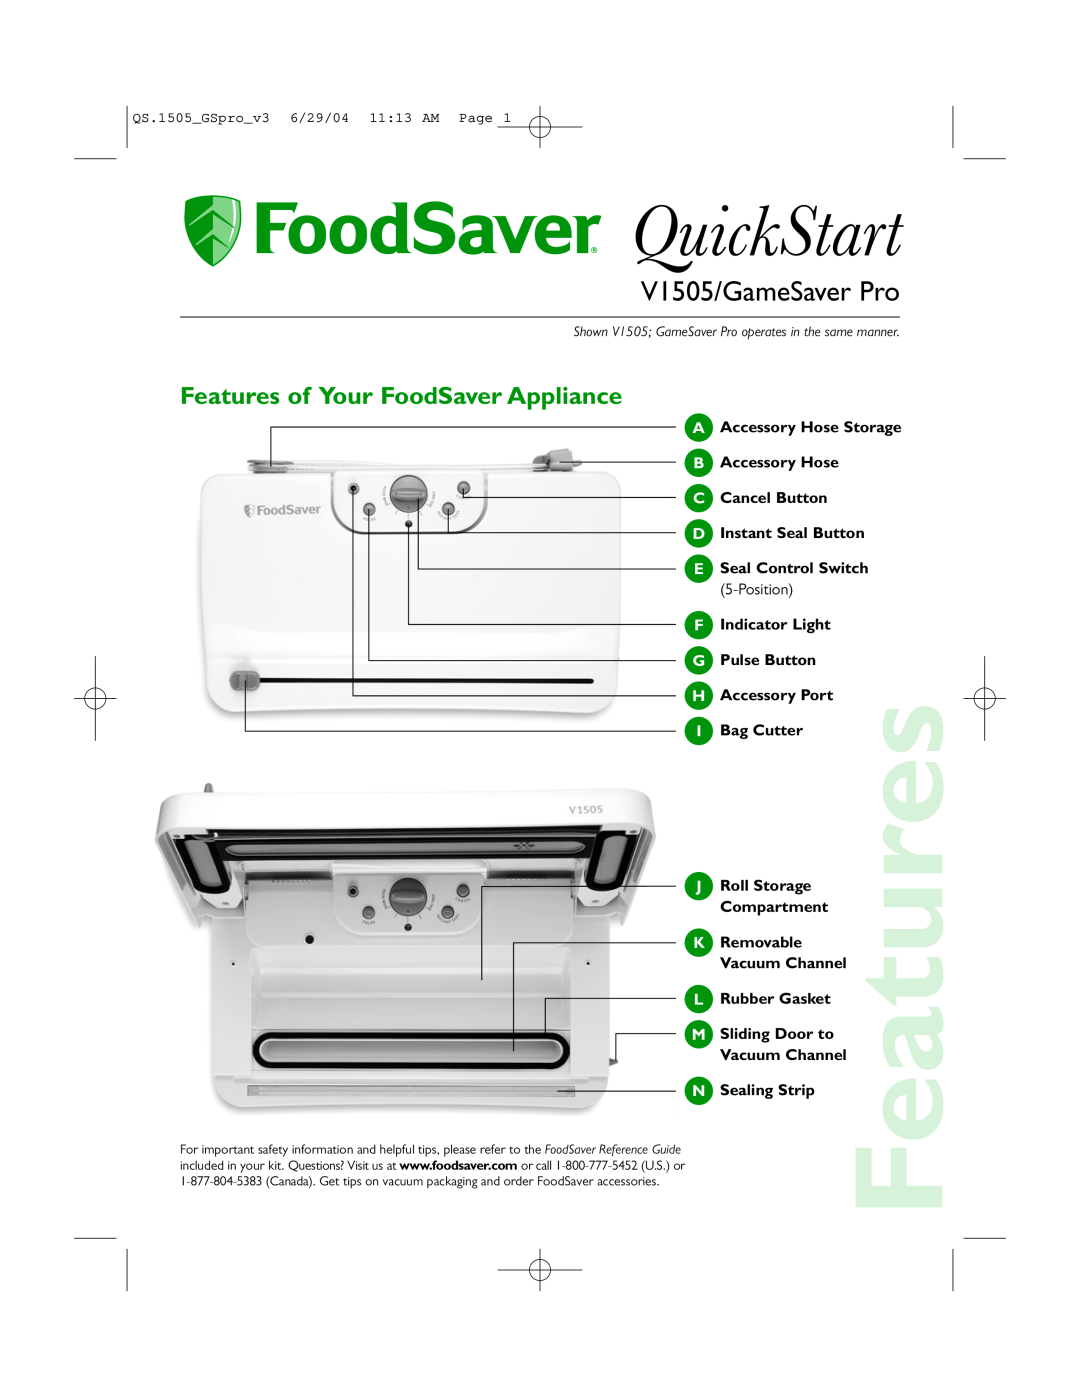 FoodSaver quick start Features of Your FoodSaver Appliance, QuickStart, V1505/GameSaver Pro 